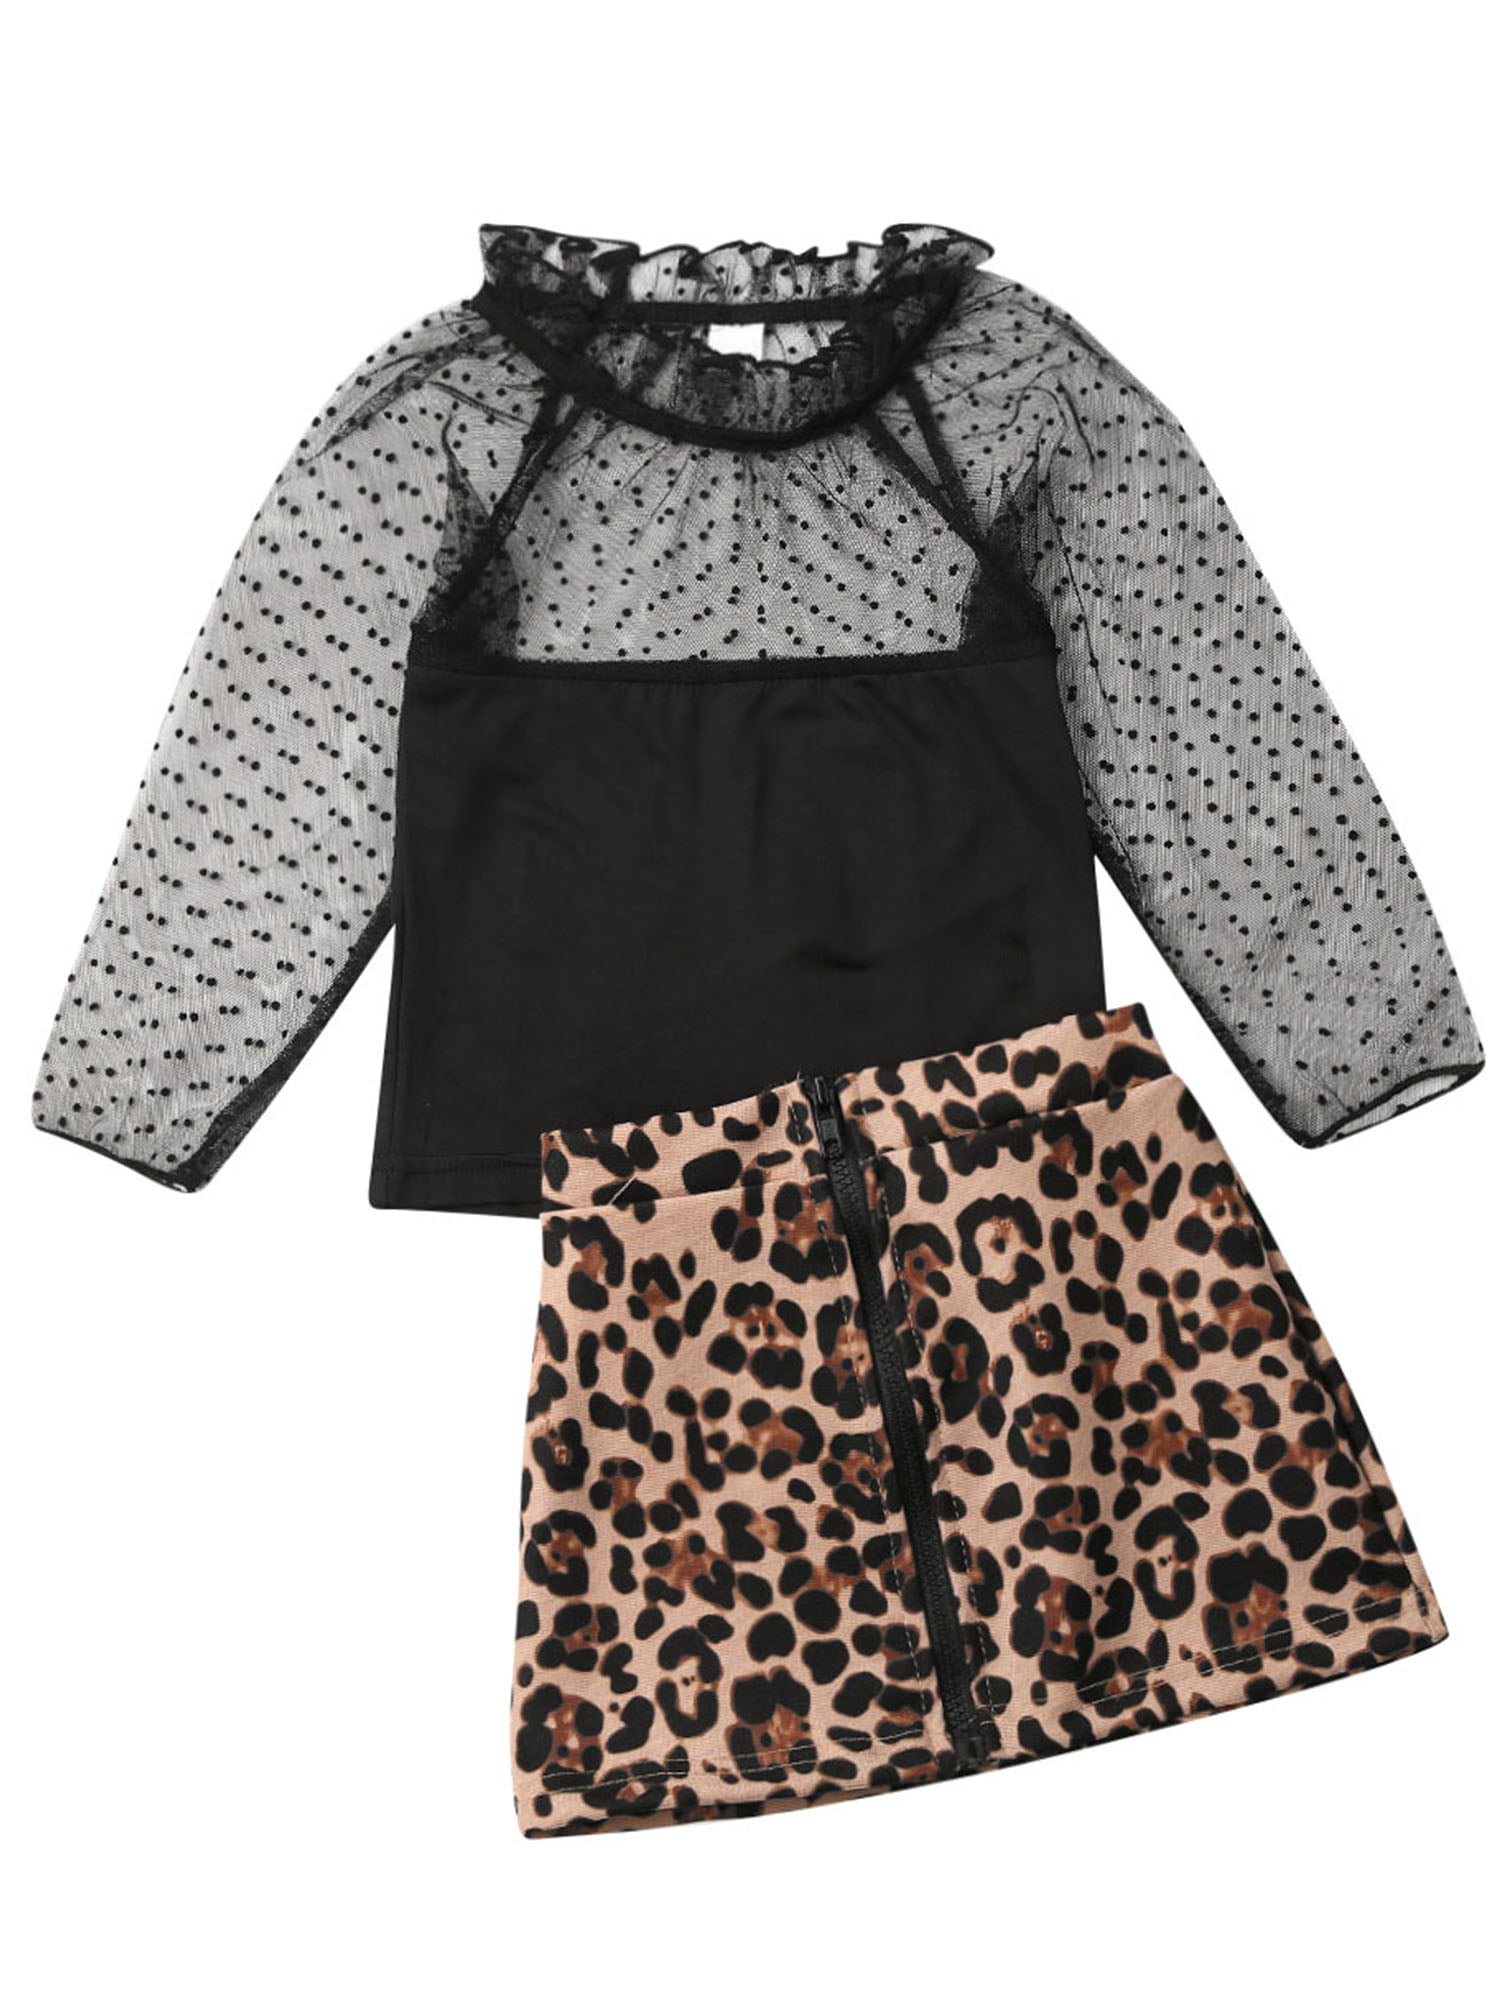 Toddler Baby Kids Girls Leopard Print T-shirt Tops+Skirt Dress Outfits Clothes 